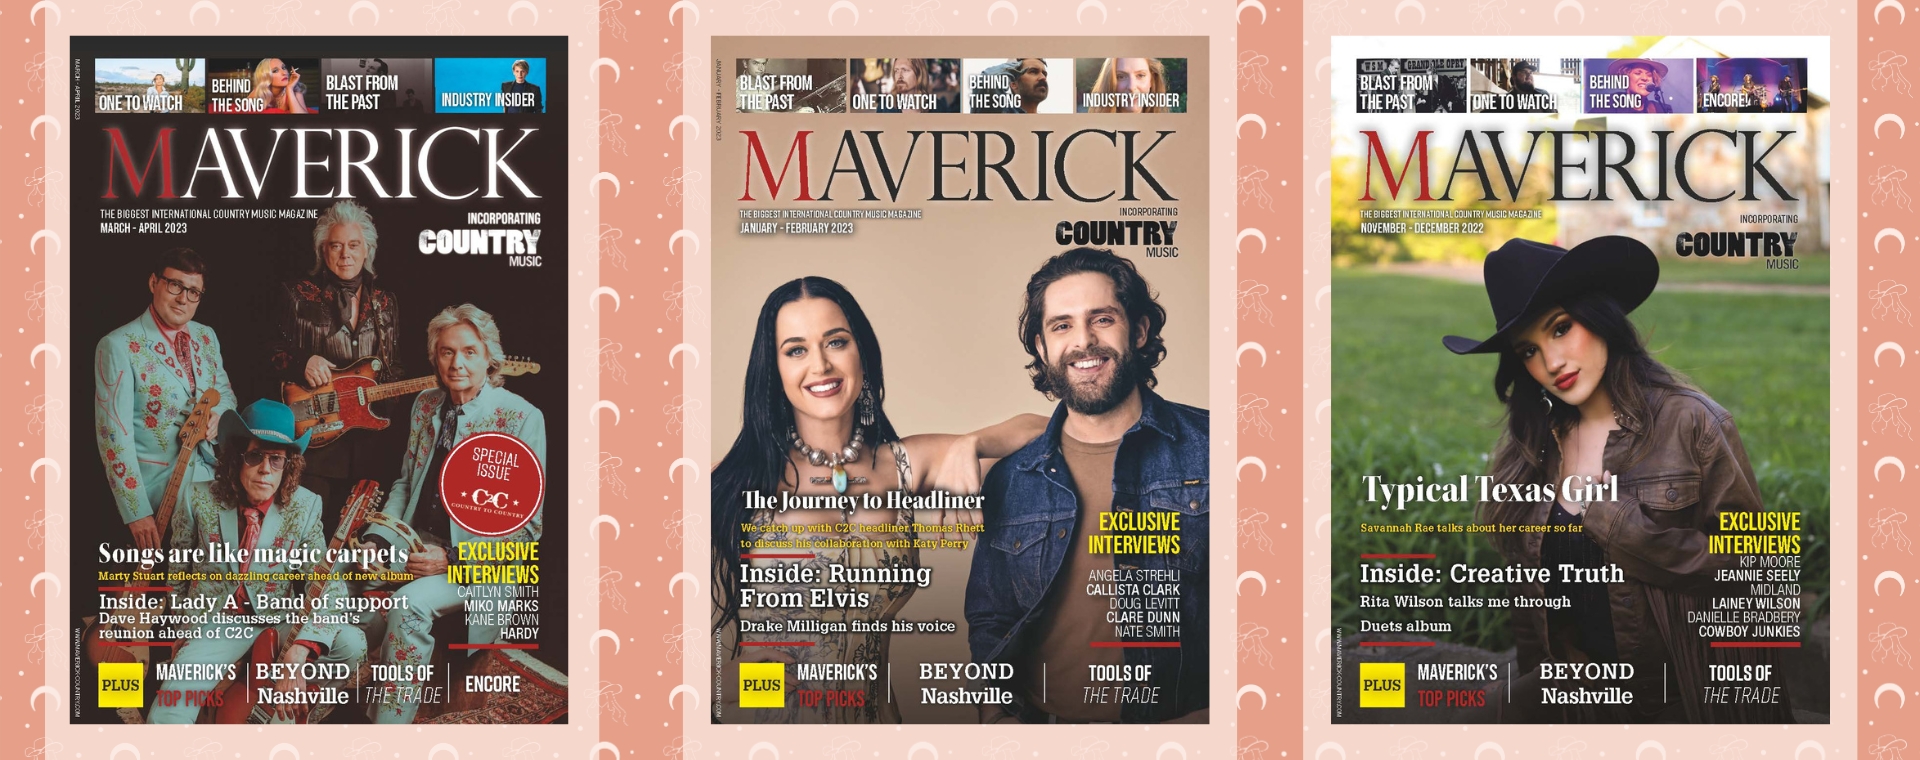 Maverick country music magazine